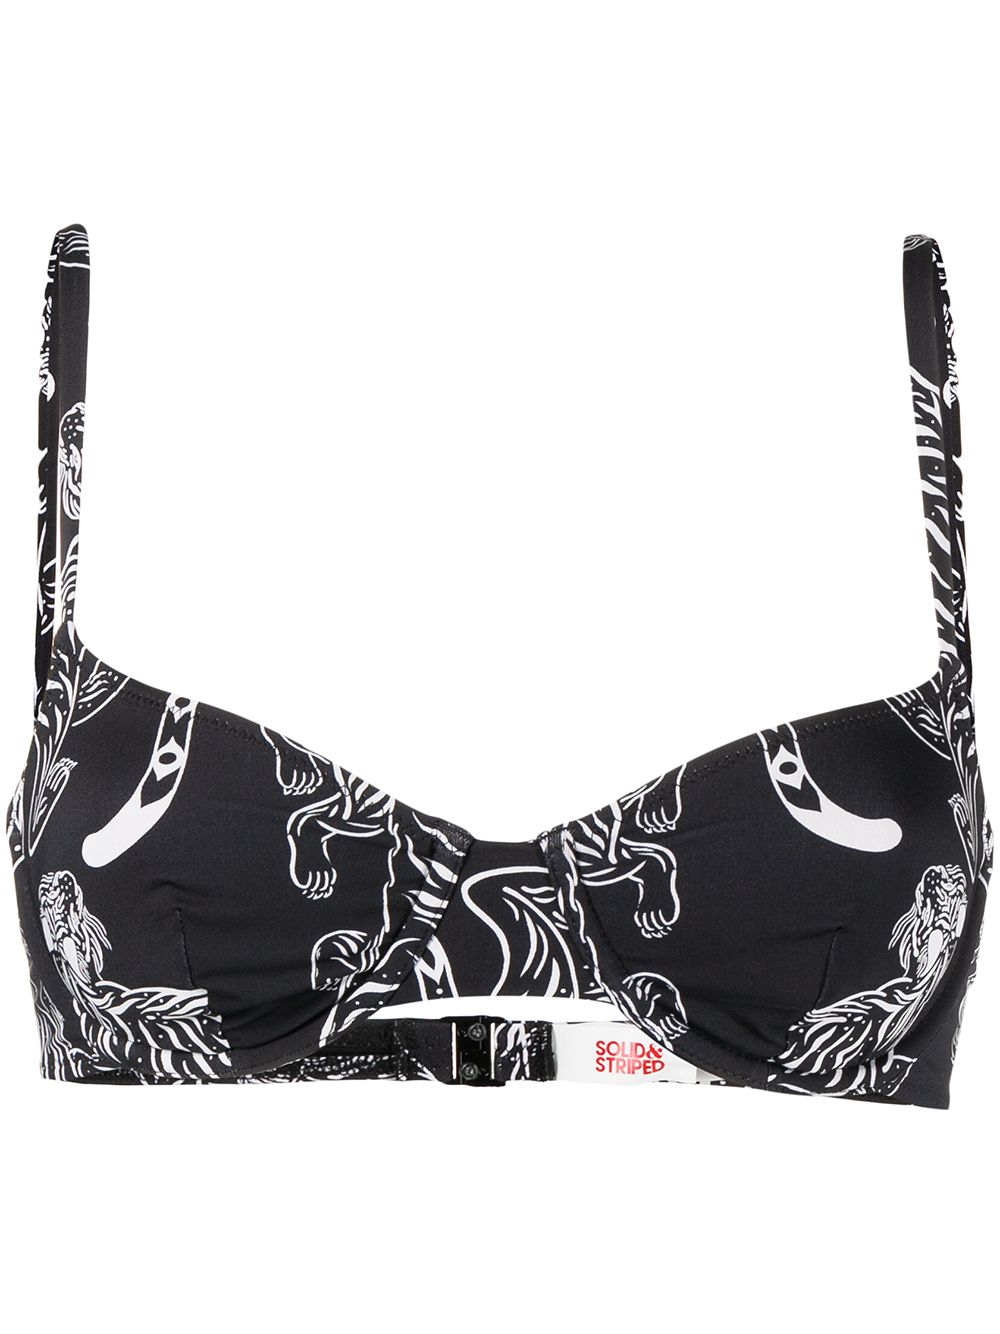 The Eva tiger-print bikini